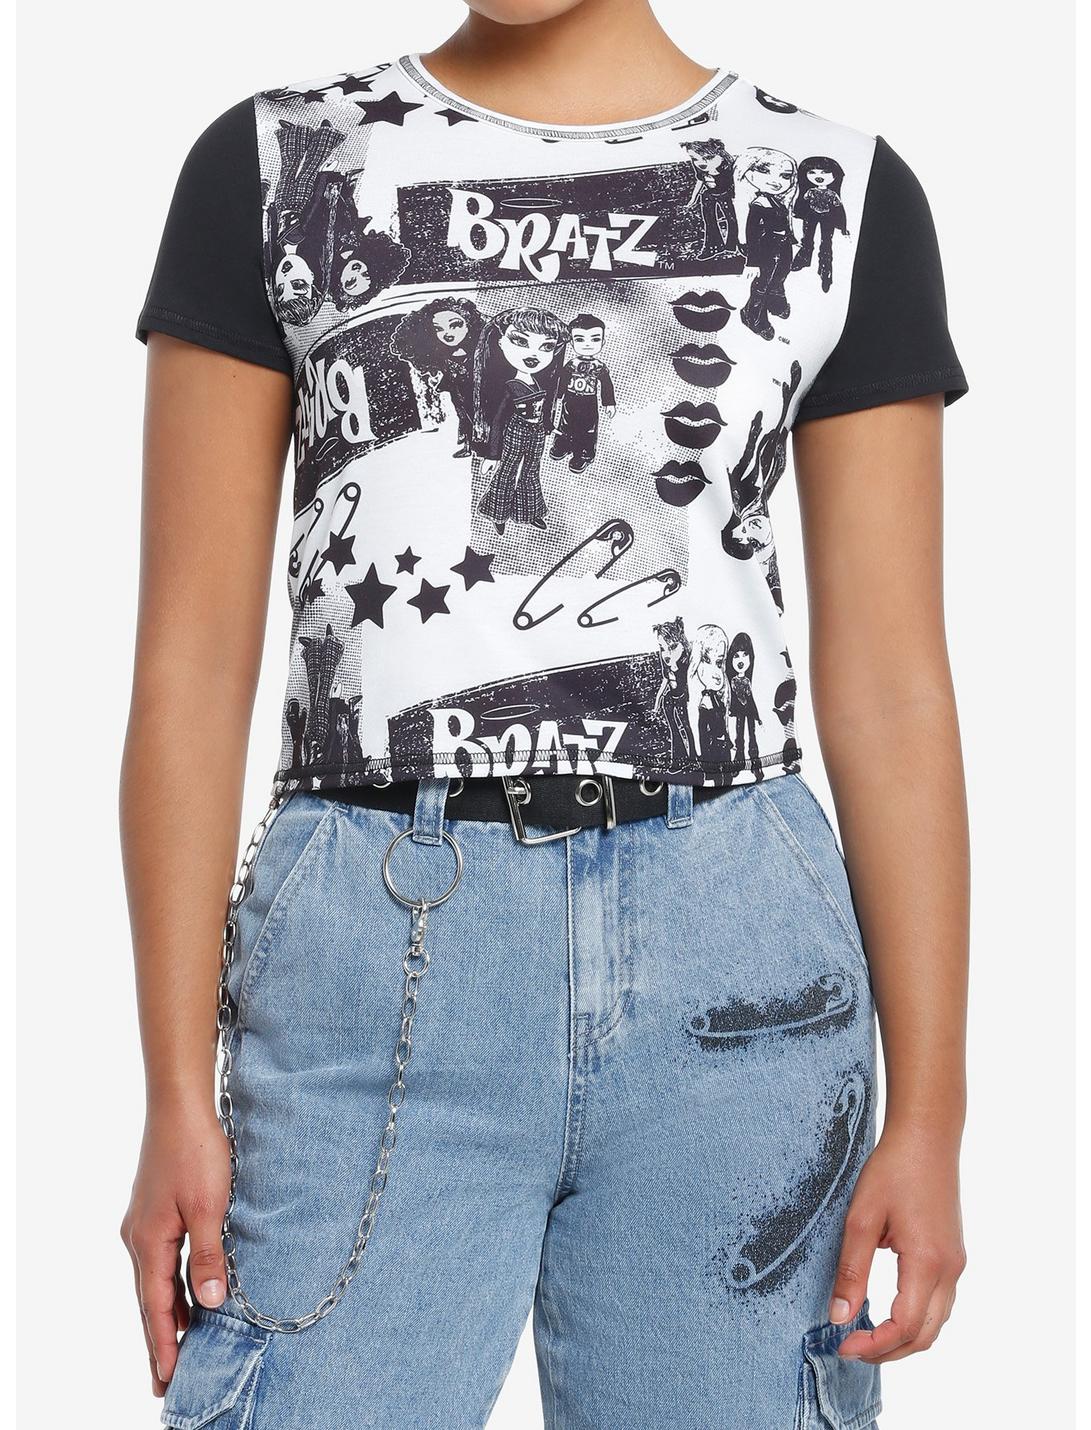 Bratz Pretty 'N' Punk Newsprint Girls Baby T-Shirt, BLACK, hi-res